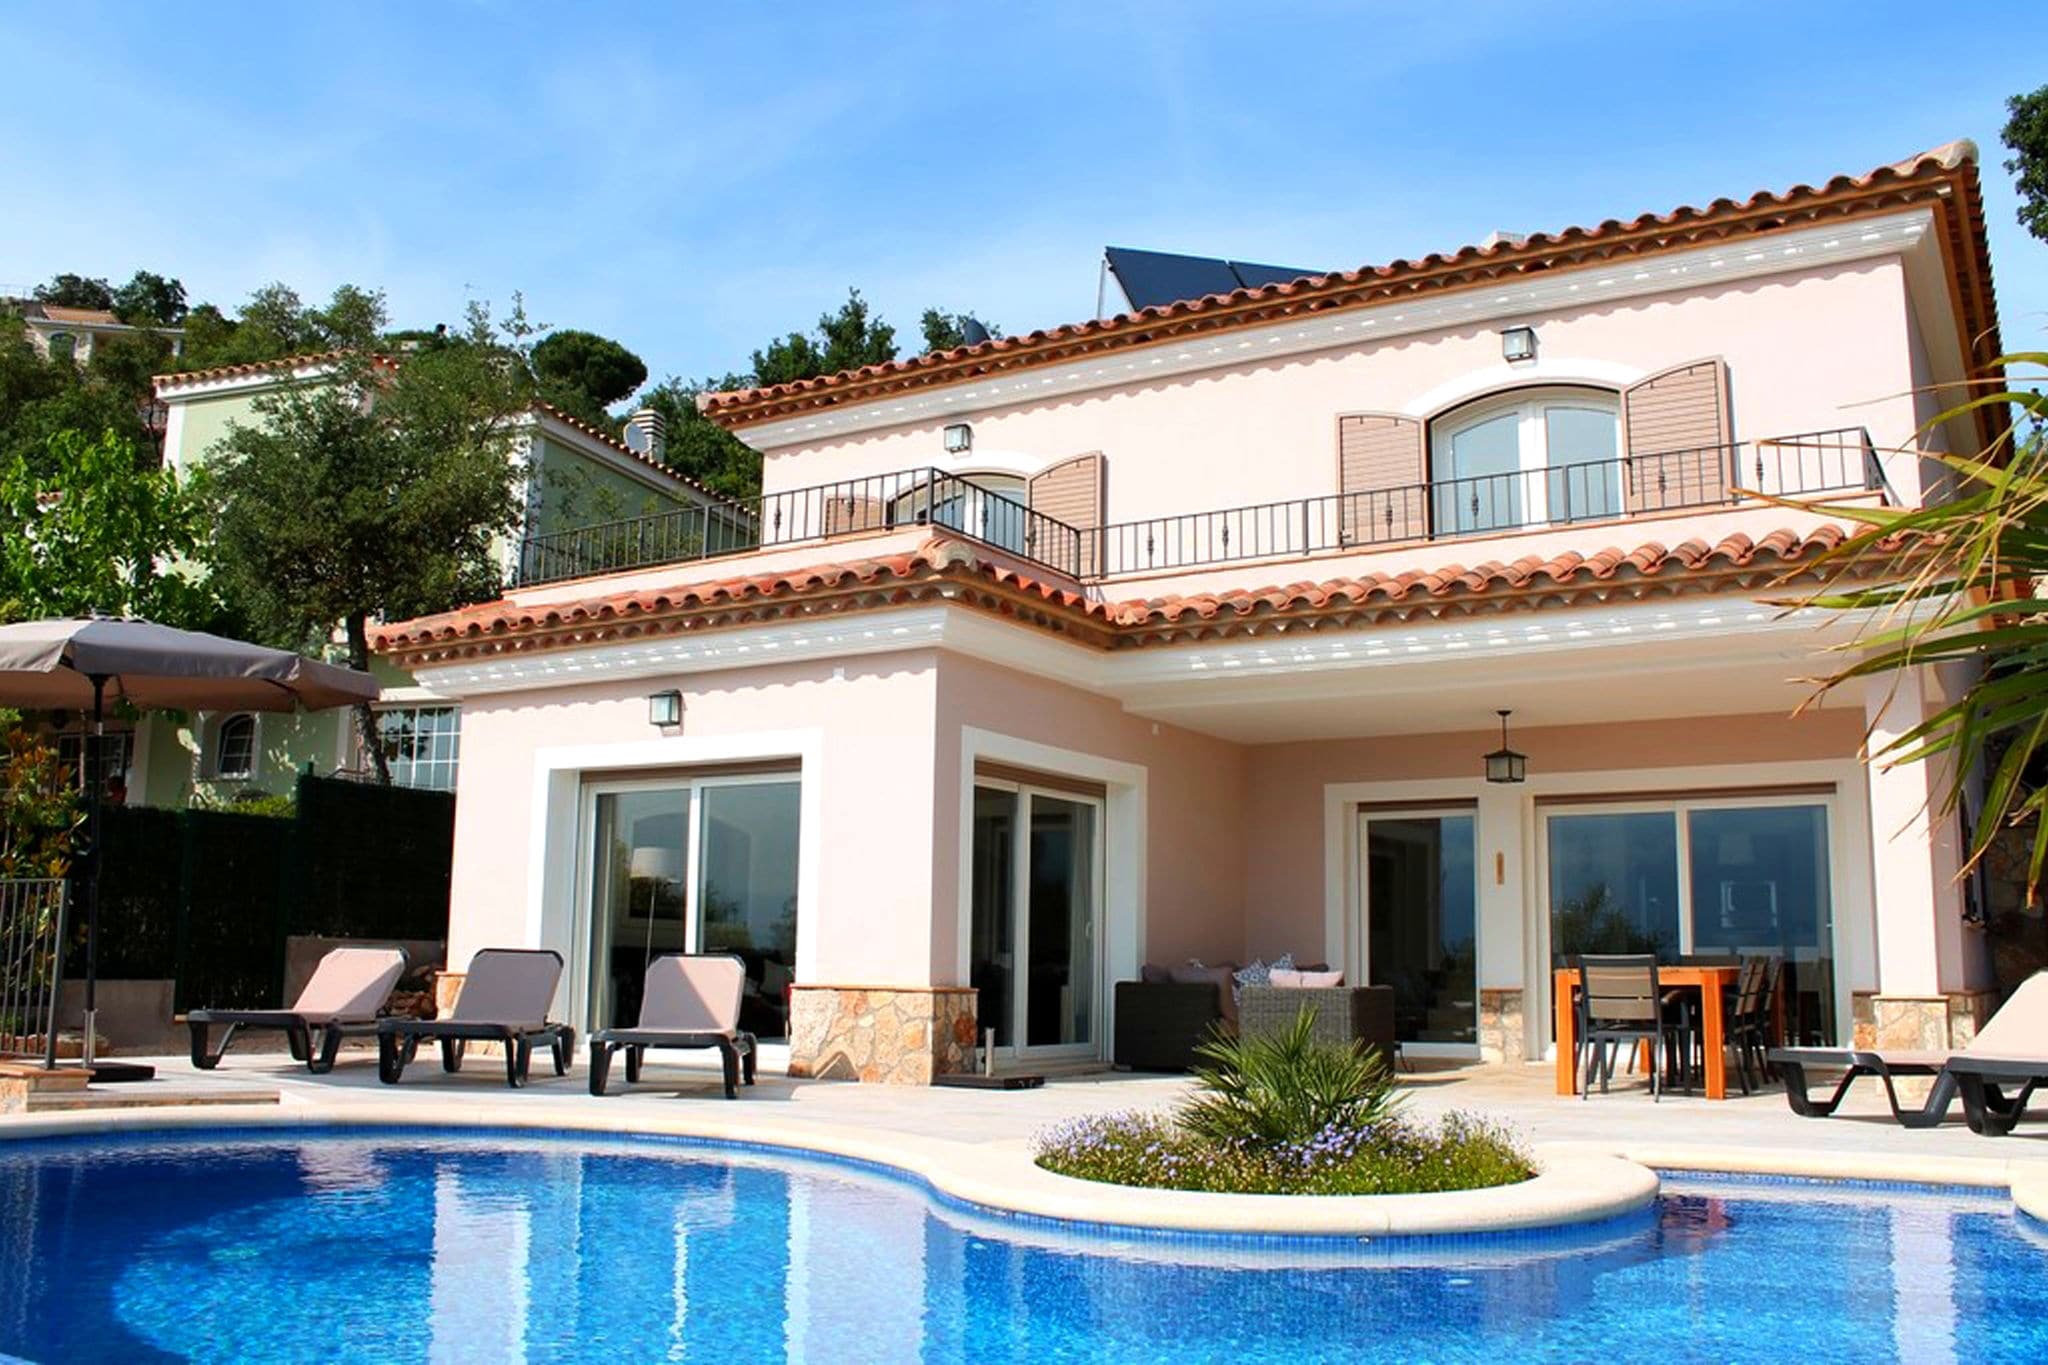 Beautiful villa with fantastic view and infinity pool near Santa Cristina d'Aro